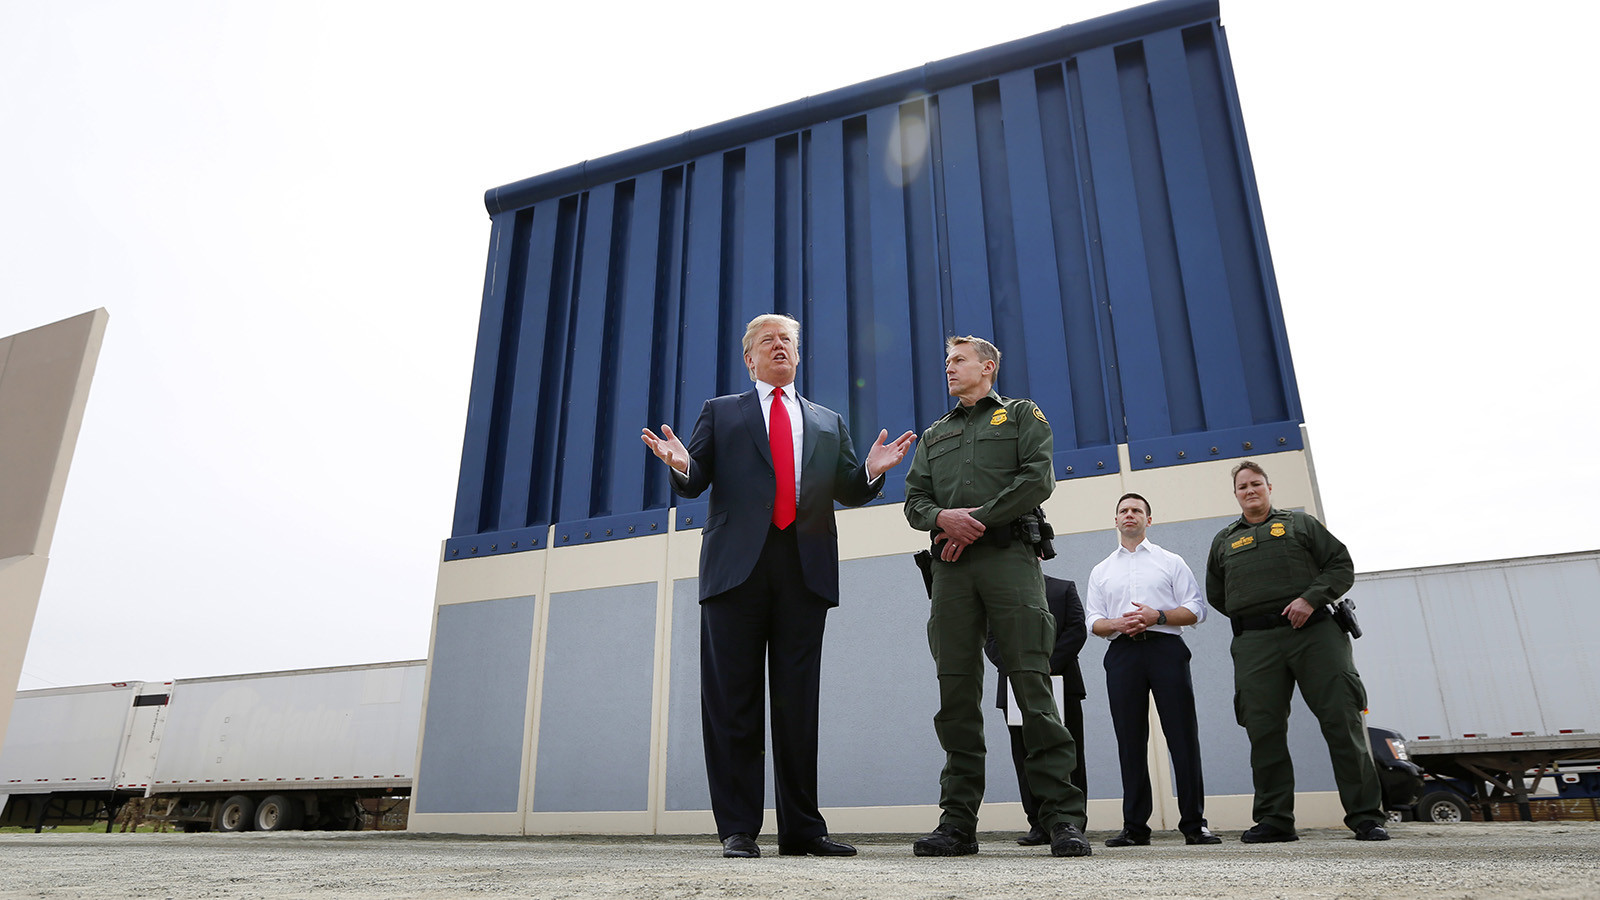 President Trump visits border wall prototypes - The San Diego Union-Tribune1600 x 900